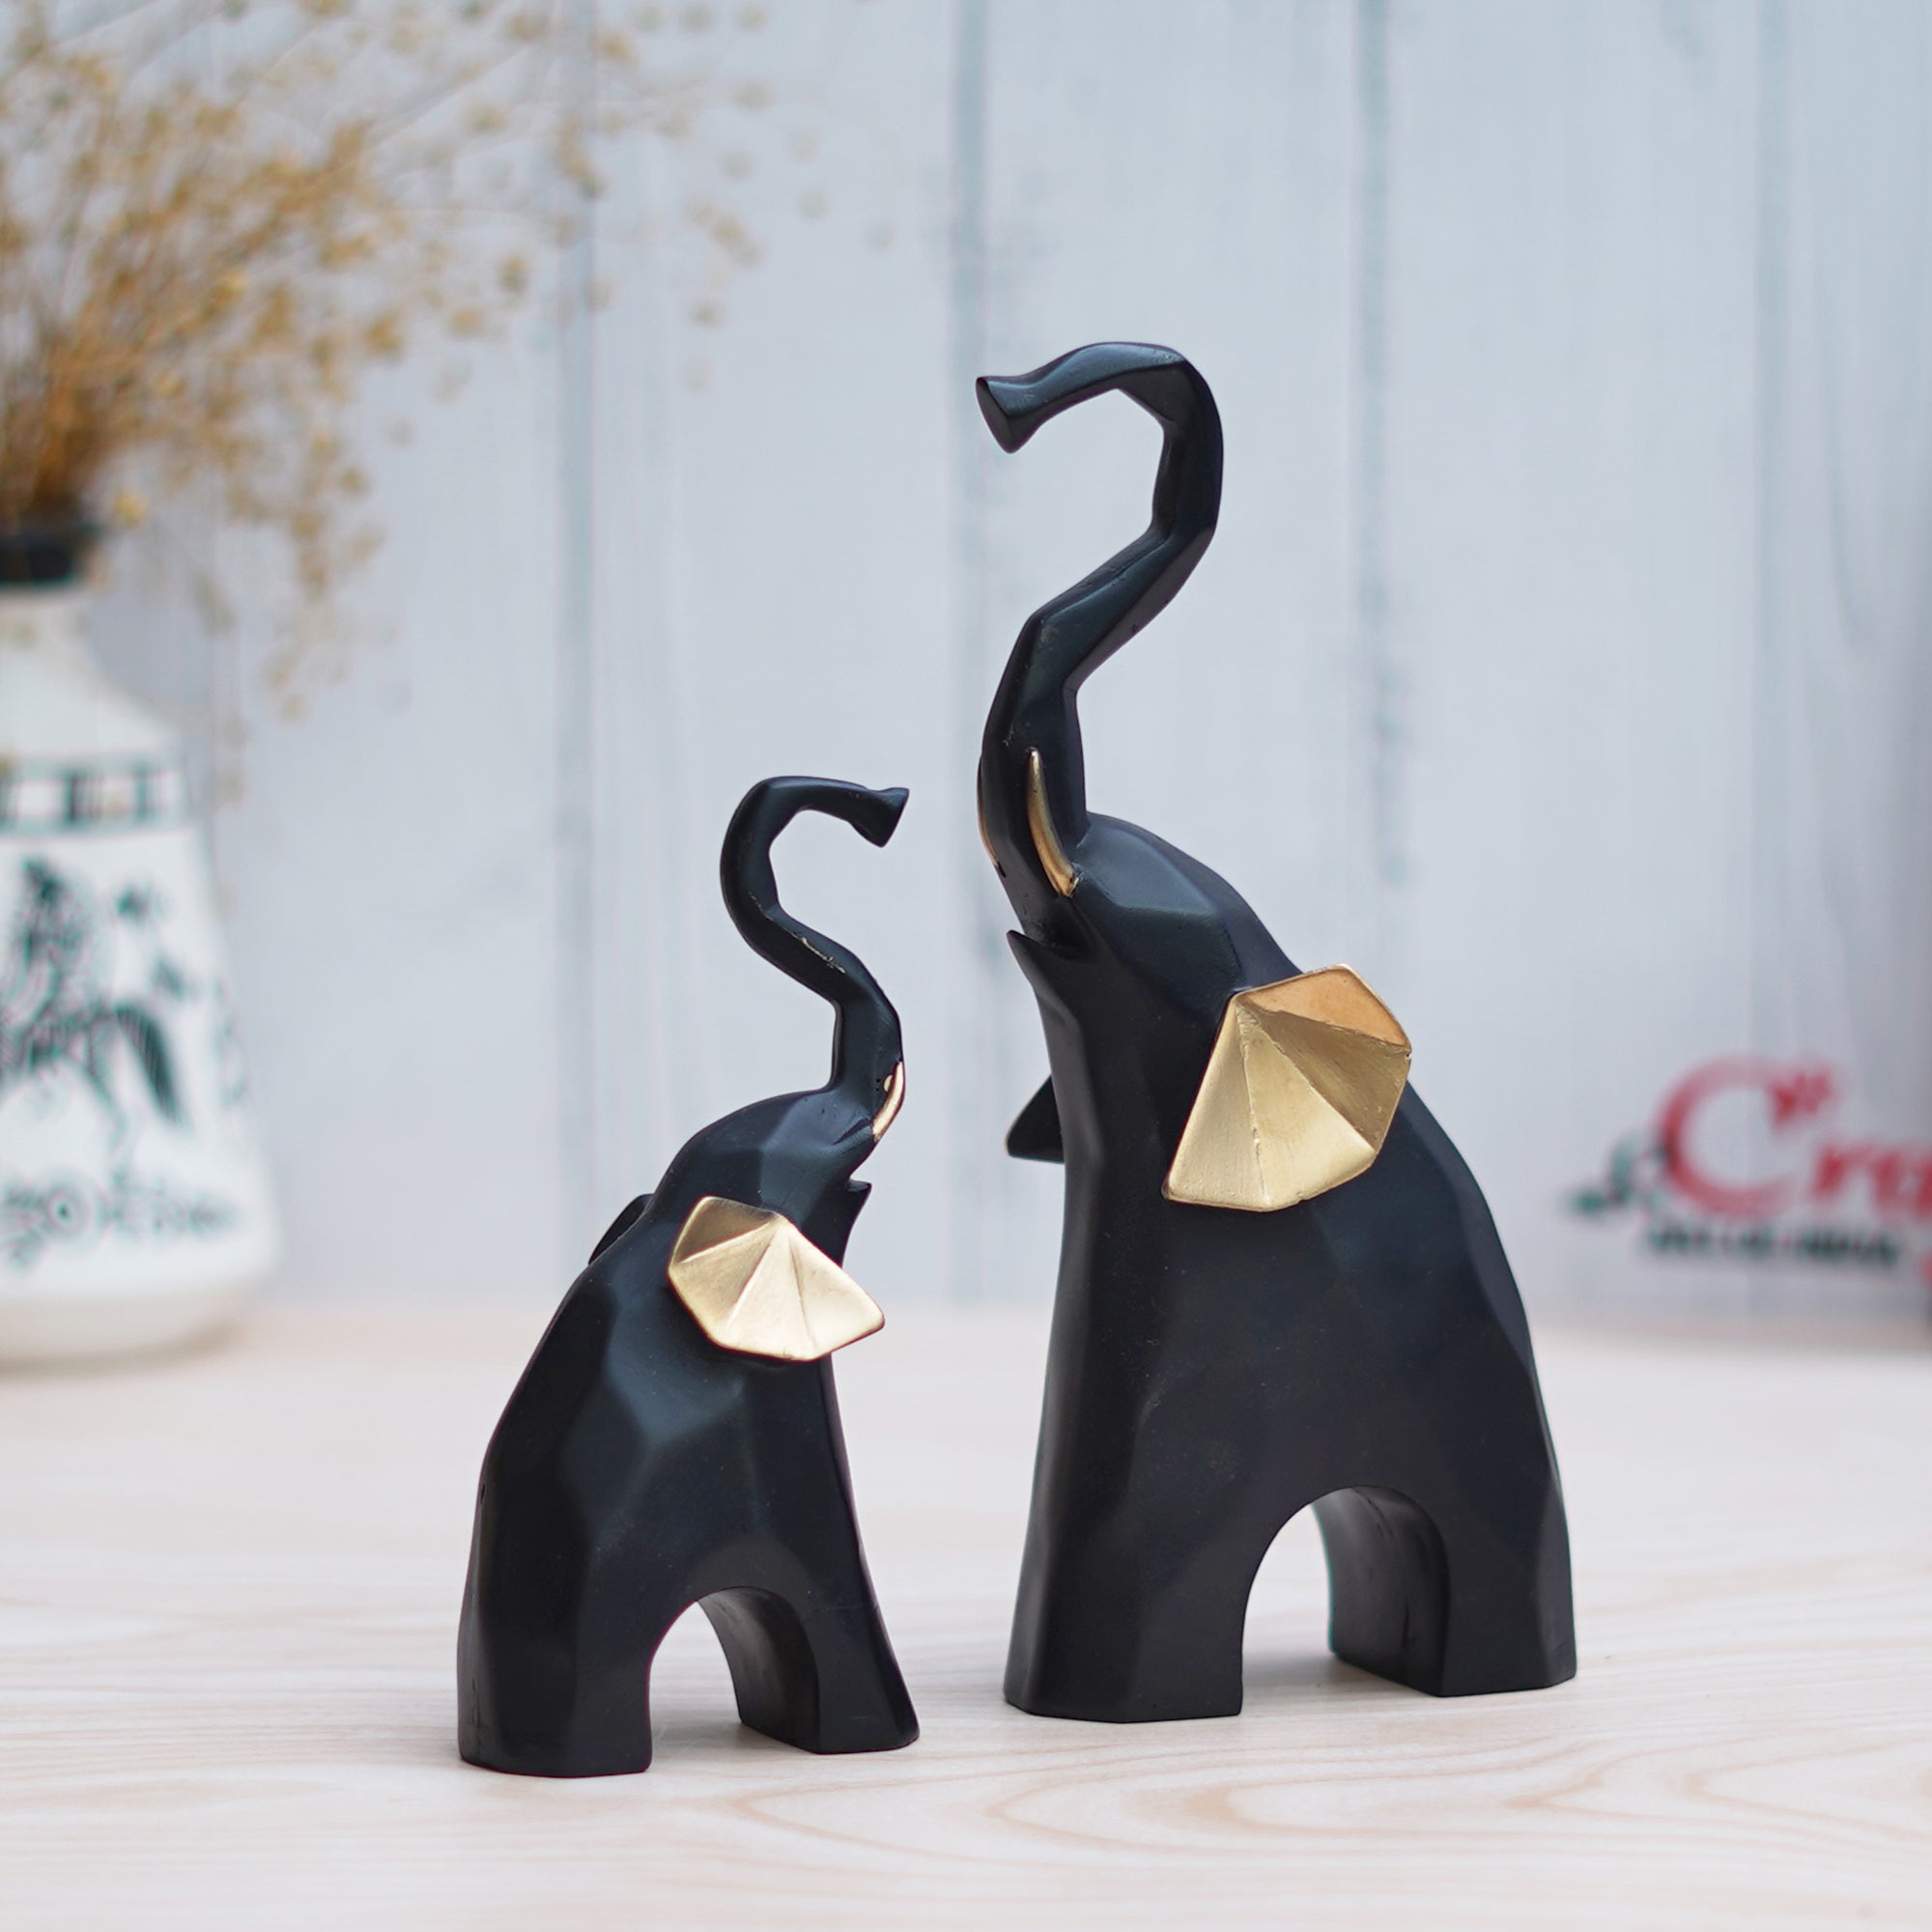 Set of 2 Gold & Black Elephant Statues Decorative Animal Showpieces 5